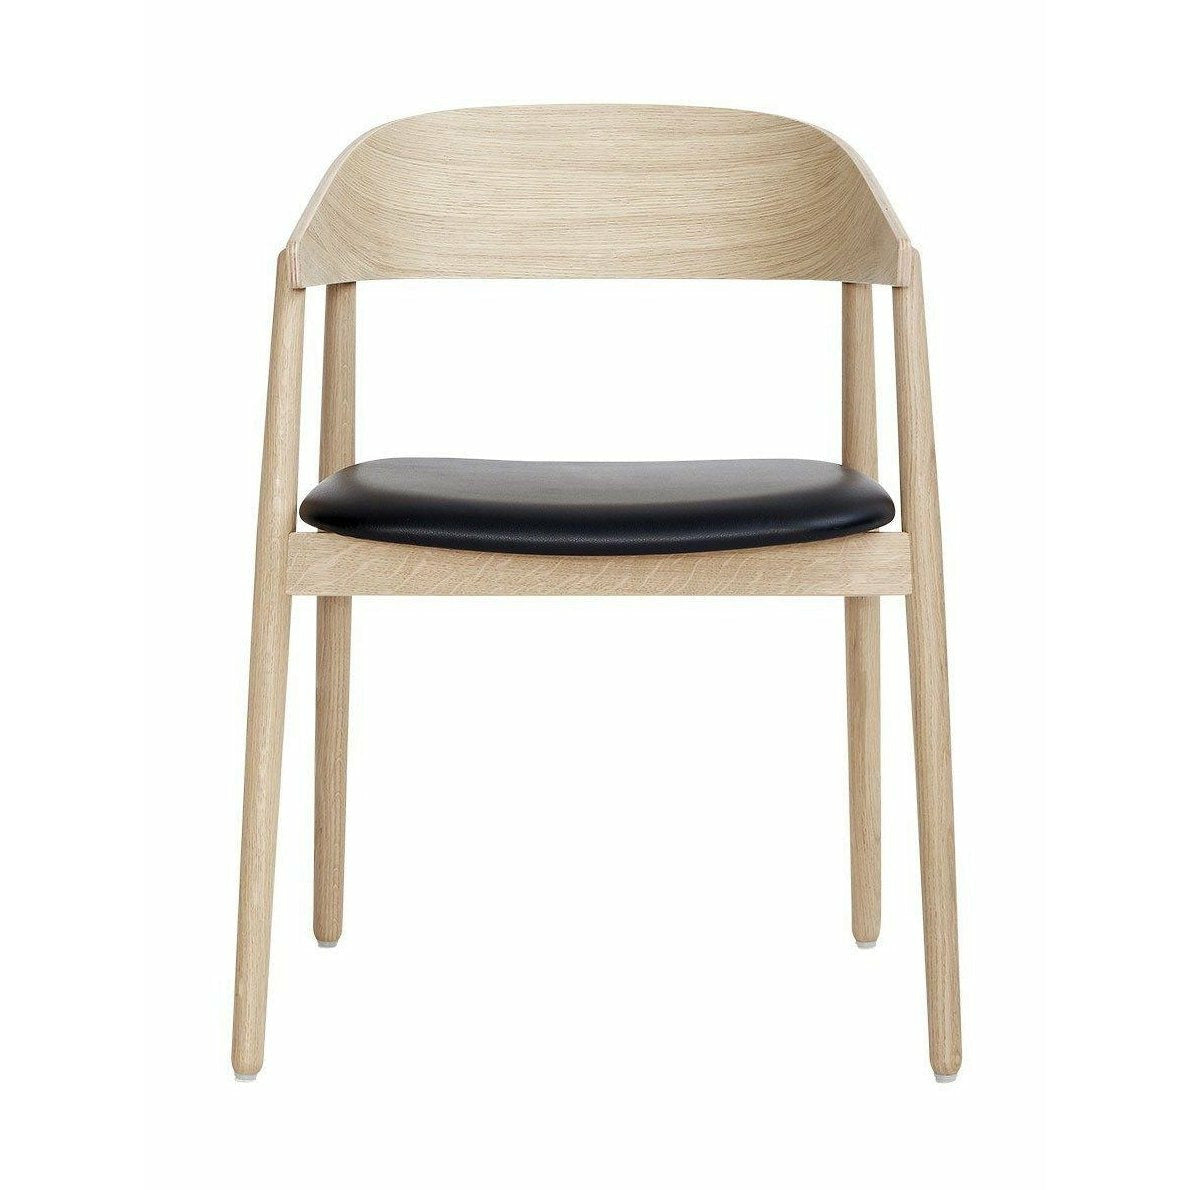 Andersen Furniture AC2 Stol Ekvit pigmenterad lack, svart läderstol